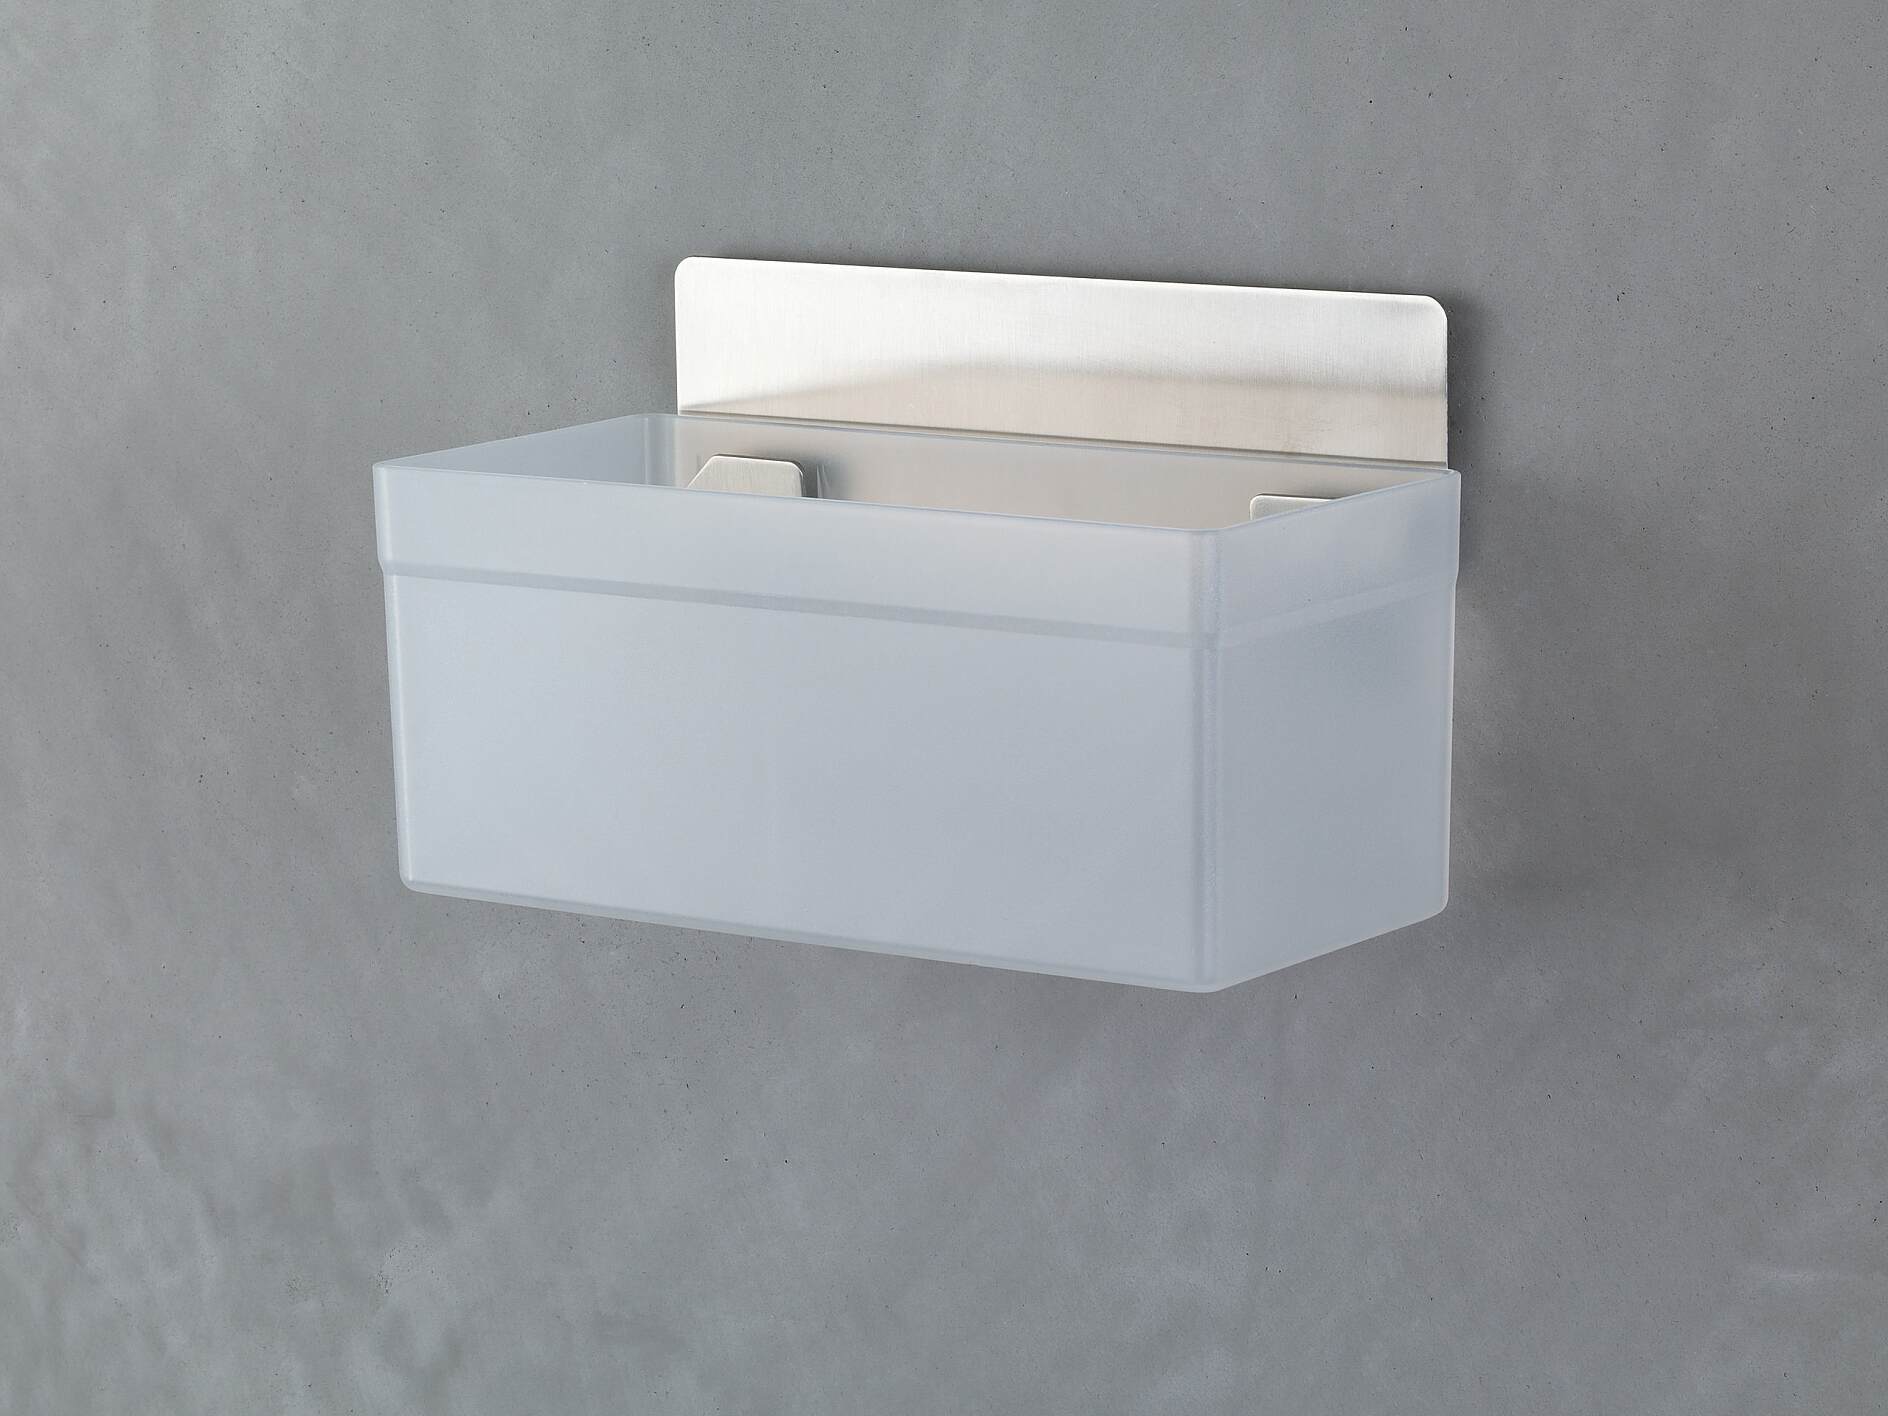 NiHome Acrylic Wall Mount Organizer 2-Pack, Slim Multi-Use Over Cabinet  Storage Bins No-Drill Installation, Versatile Use for Kitchen, Bathroom